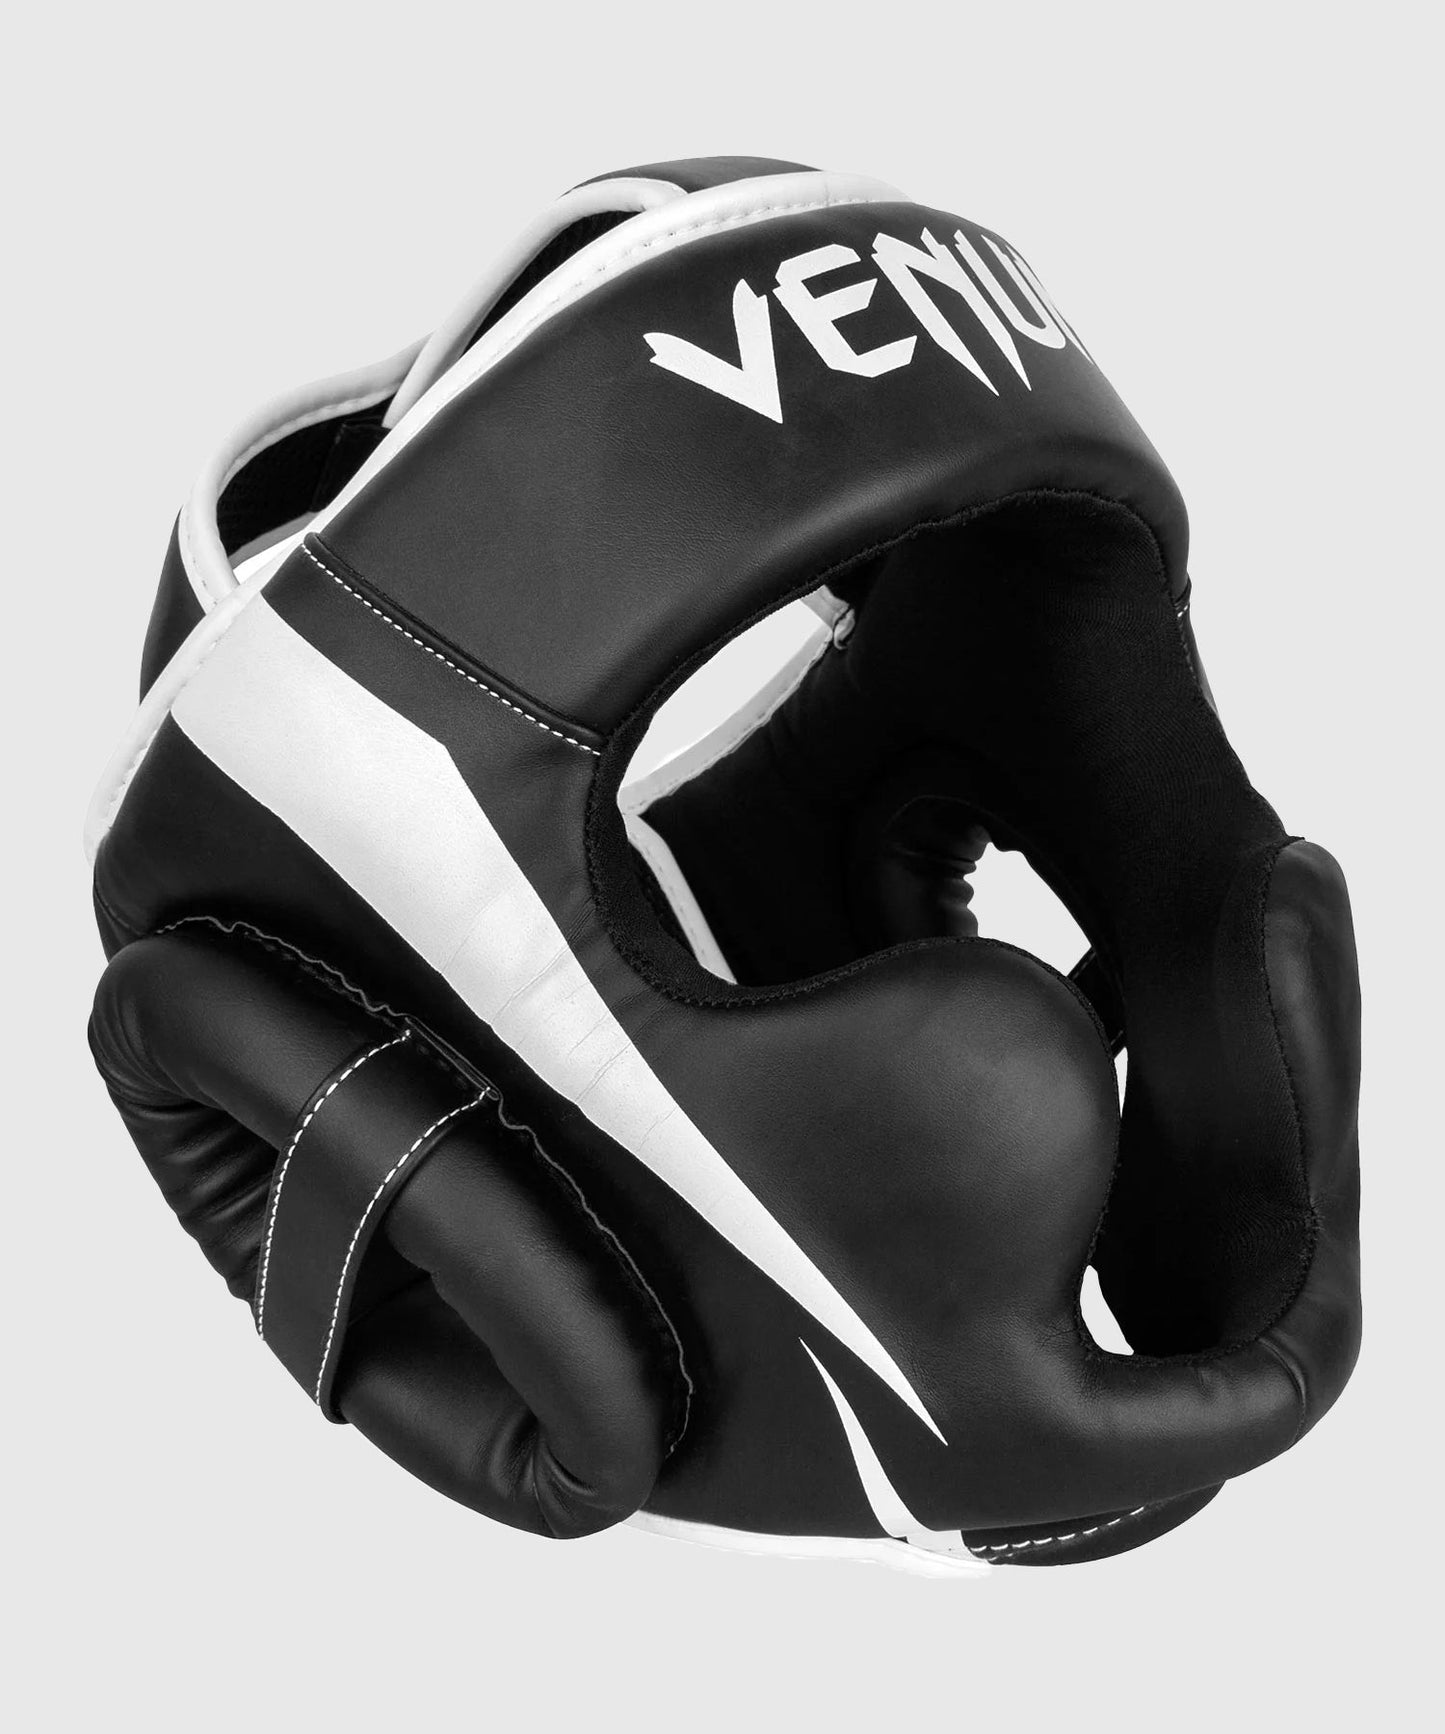 Venum Elite Headgear - White/Black